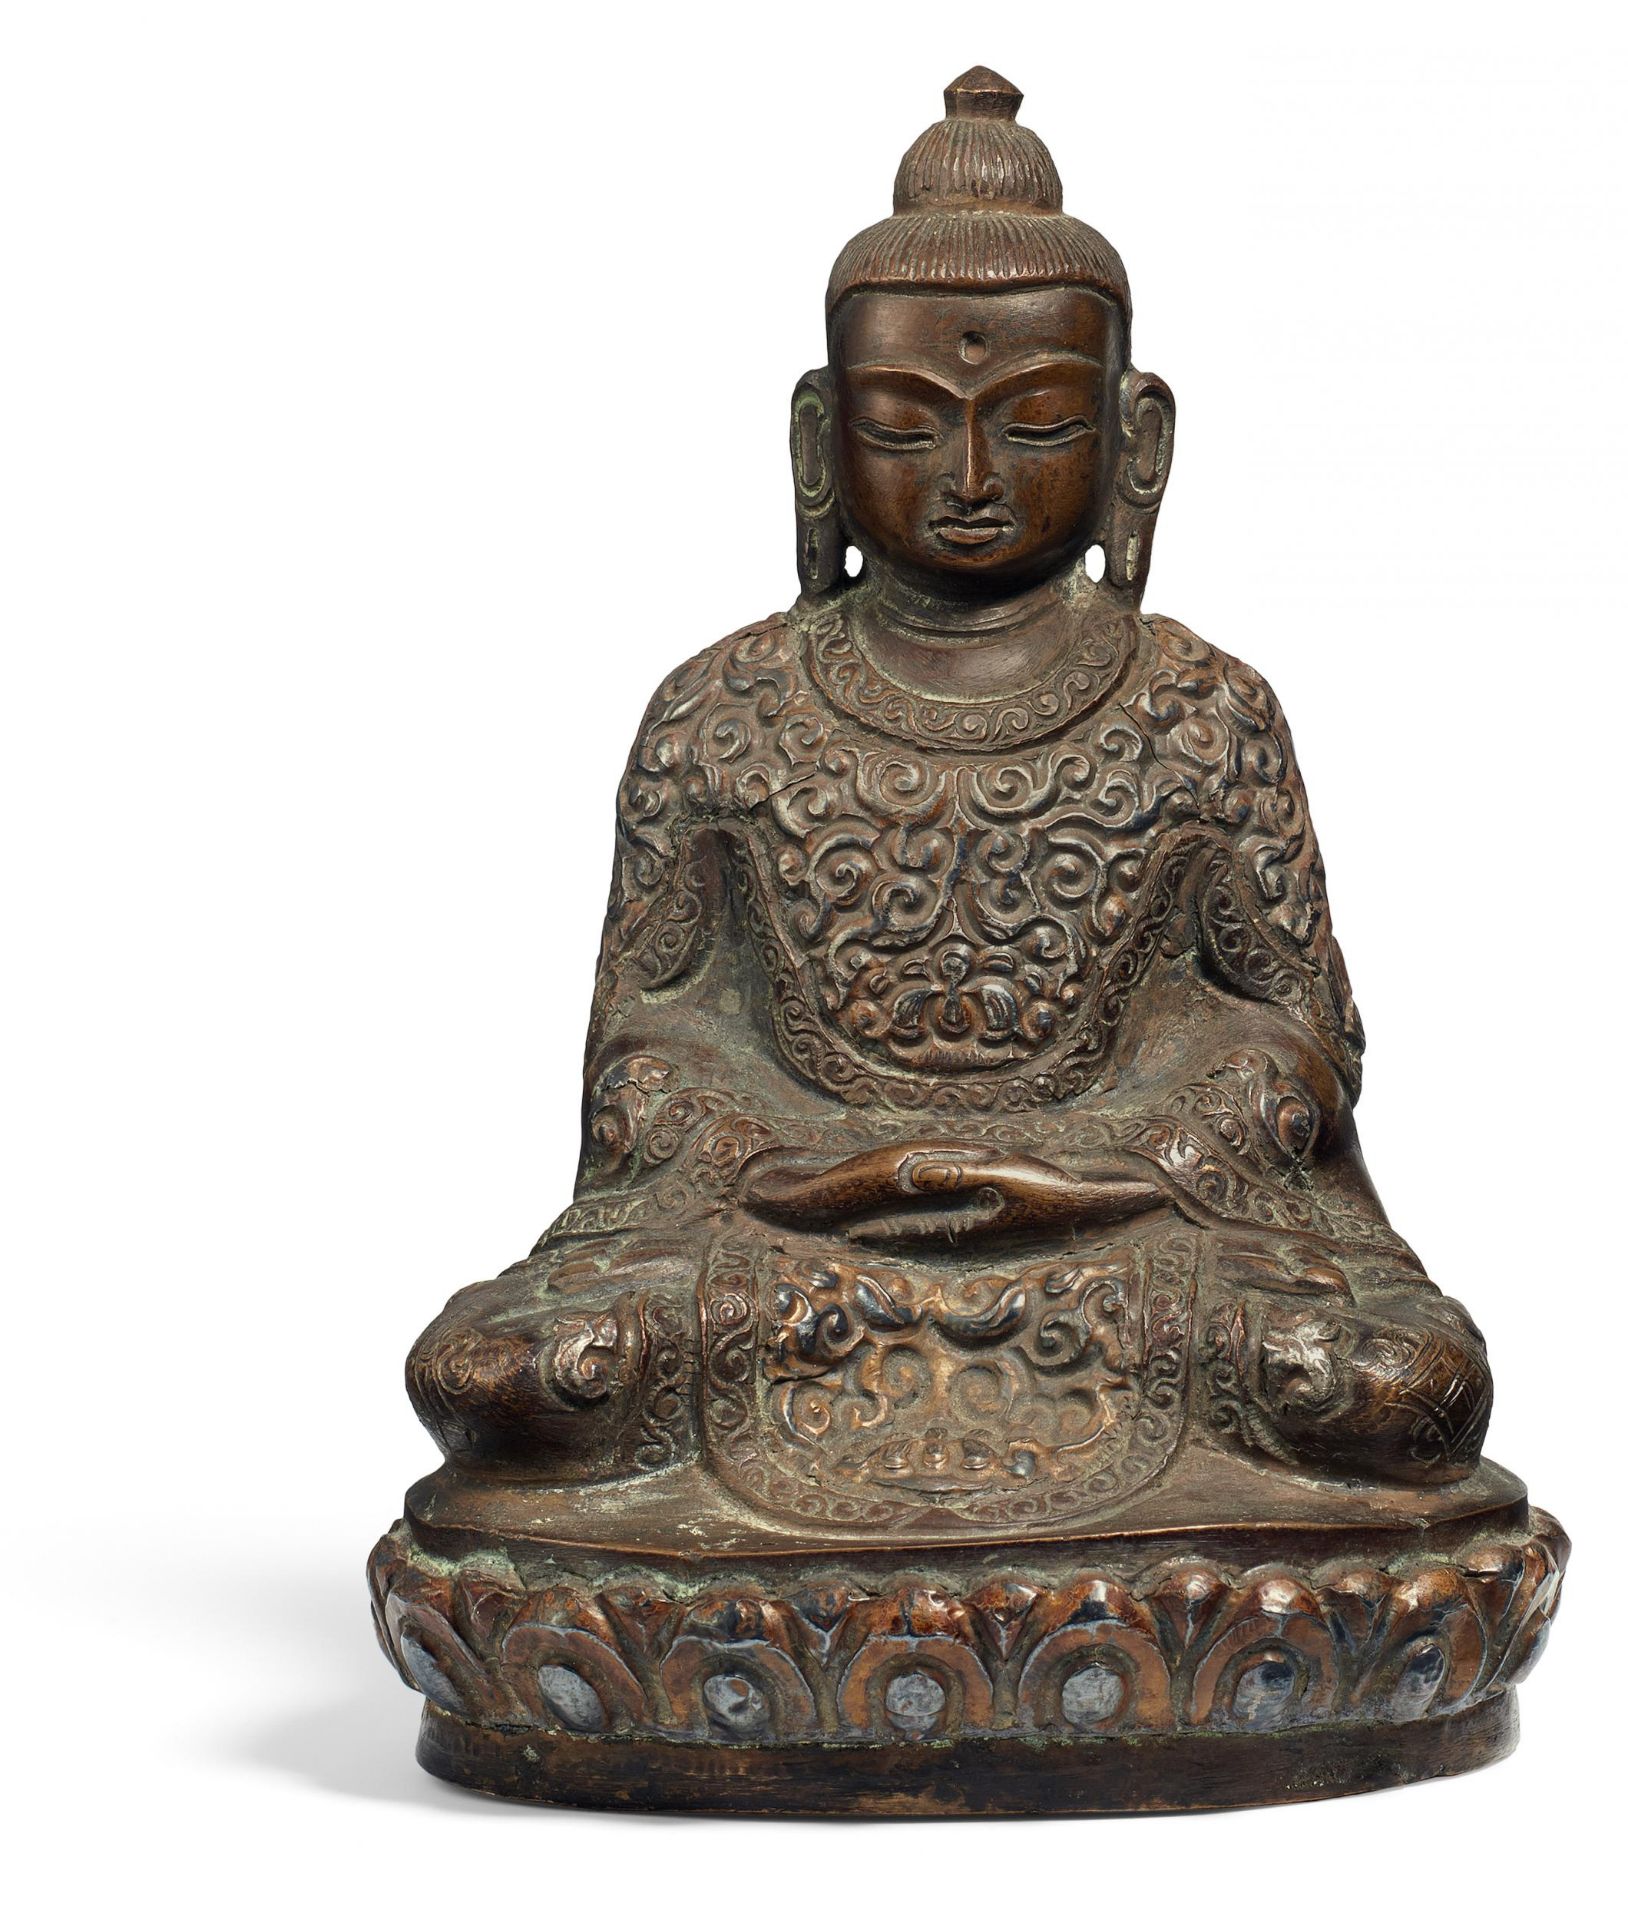 IMPORTANT BUDDHA IN ROYAL REGALIA. Sino-Tibetan. 18th/19th c. Copper bronze. The tendril pattern